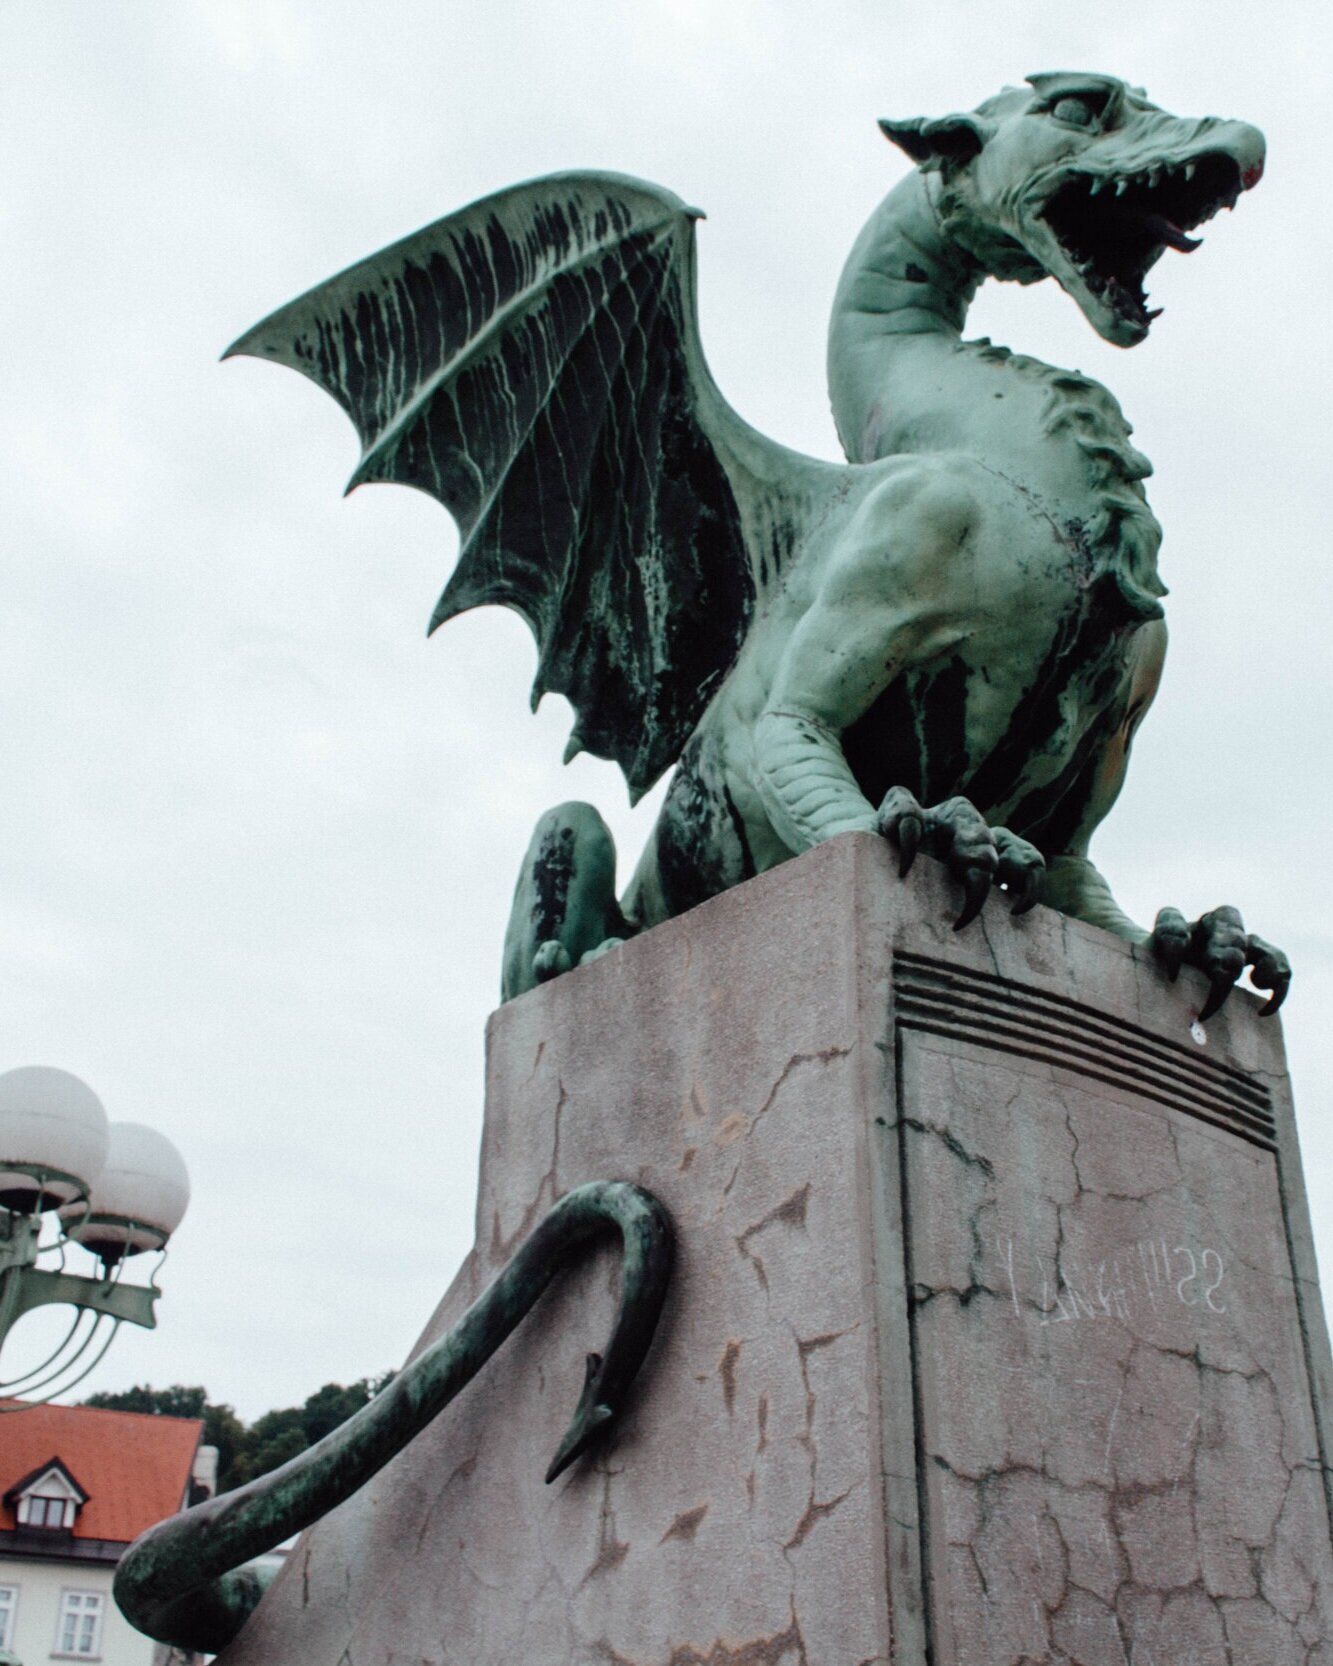 a dragon statue on the bridge Ljubljana, Slovenia